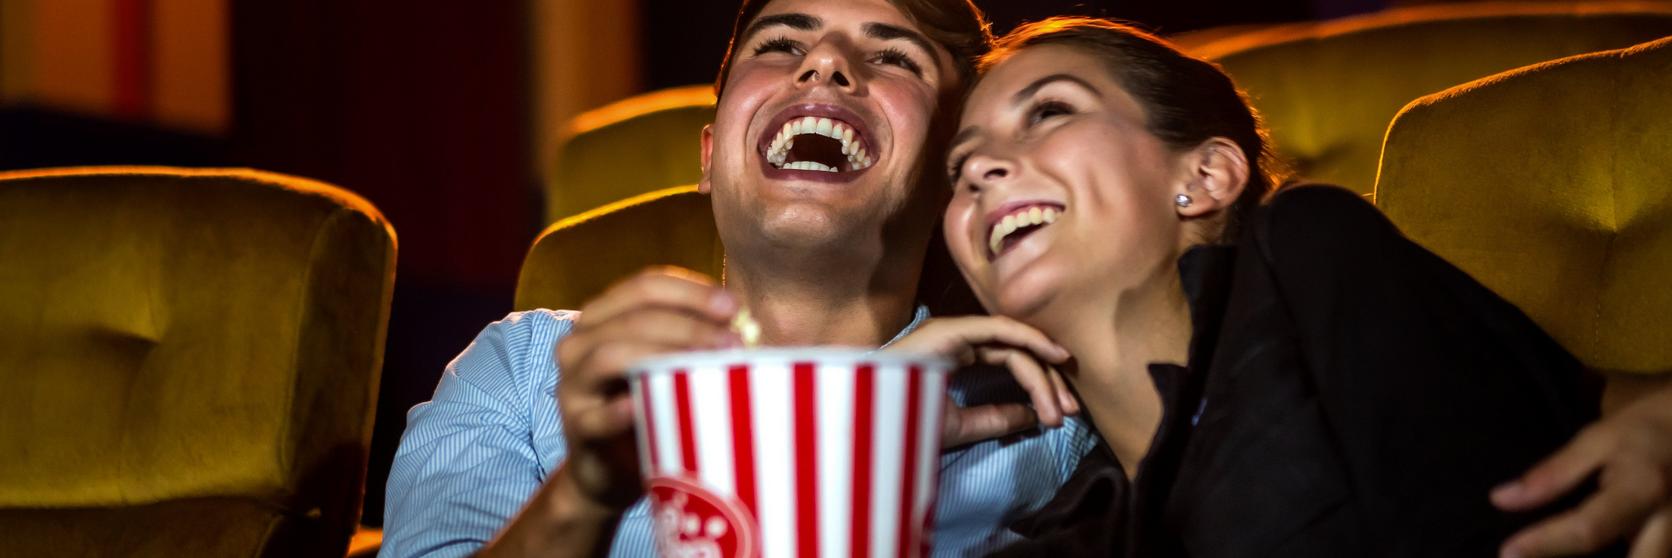 couple-in-cinema-popcorn